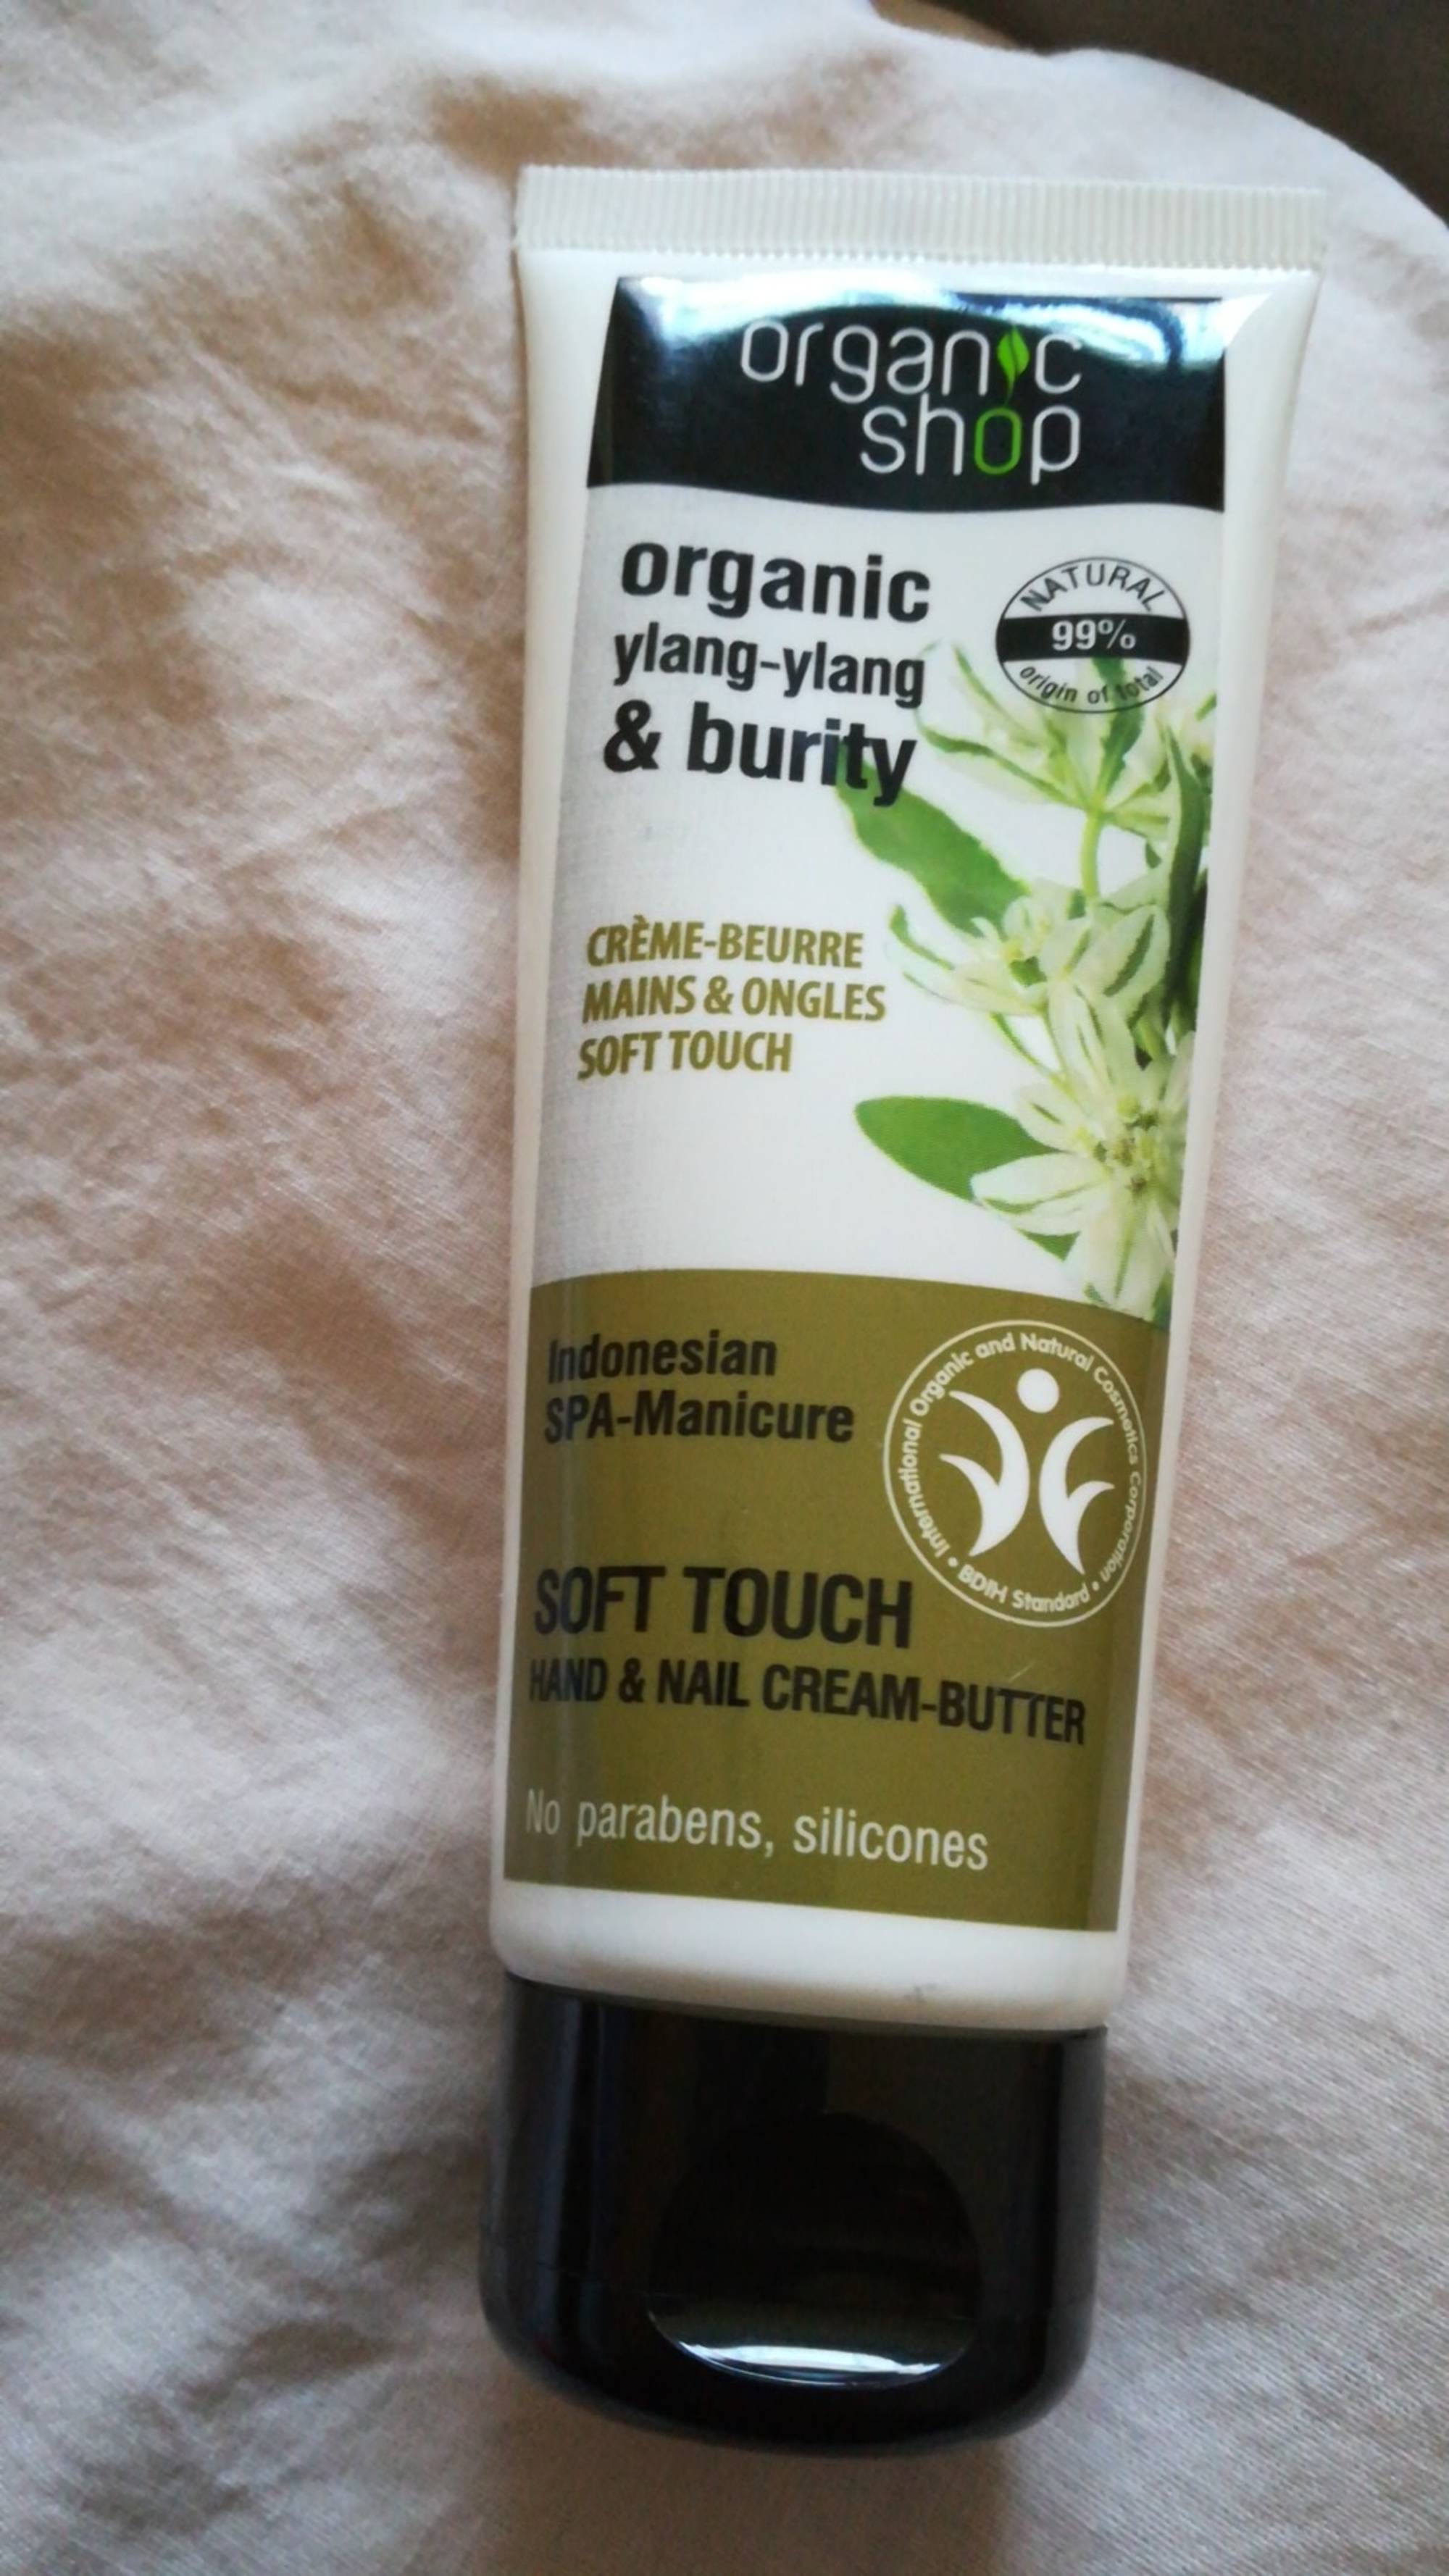 ORGANIC SHOP - Organic ylang-ylang & burity - Crème-beurre mains & ongles